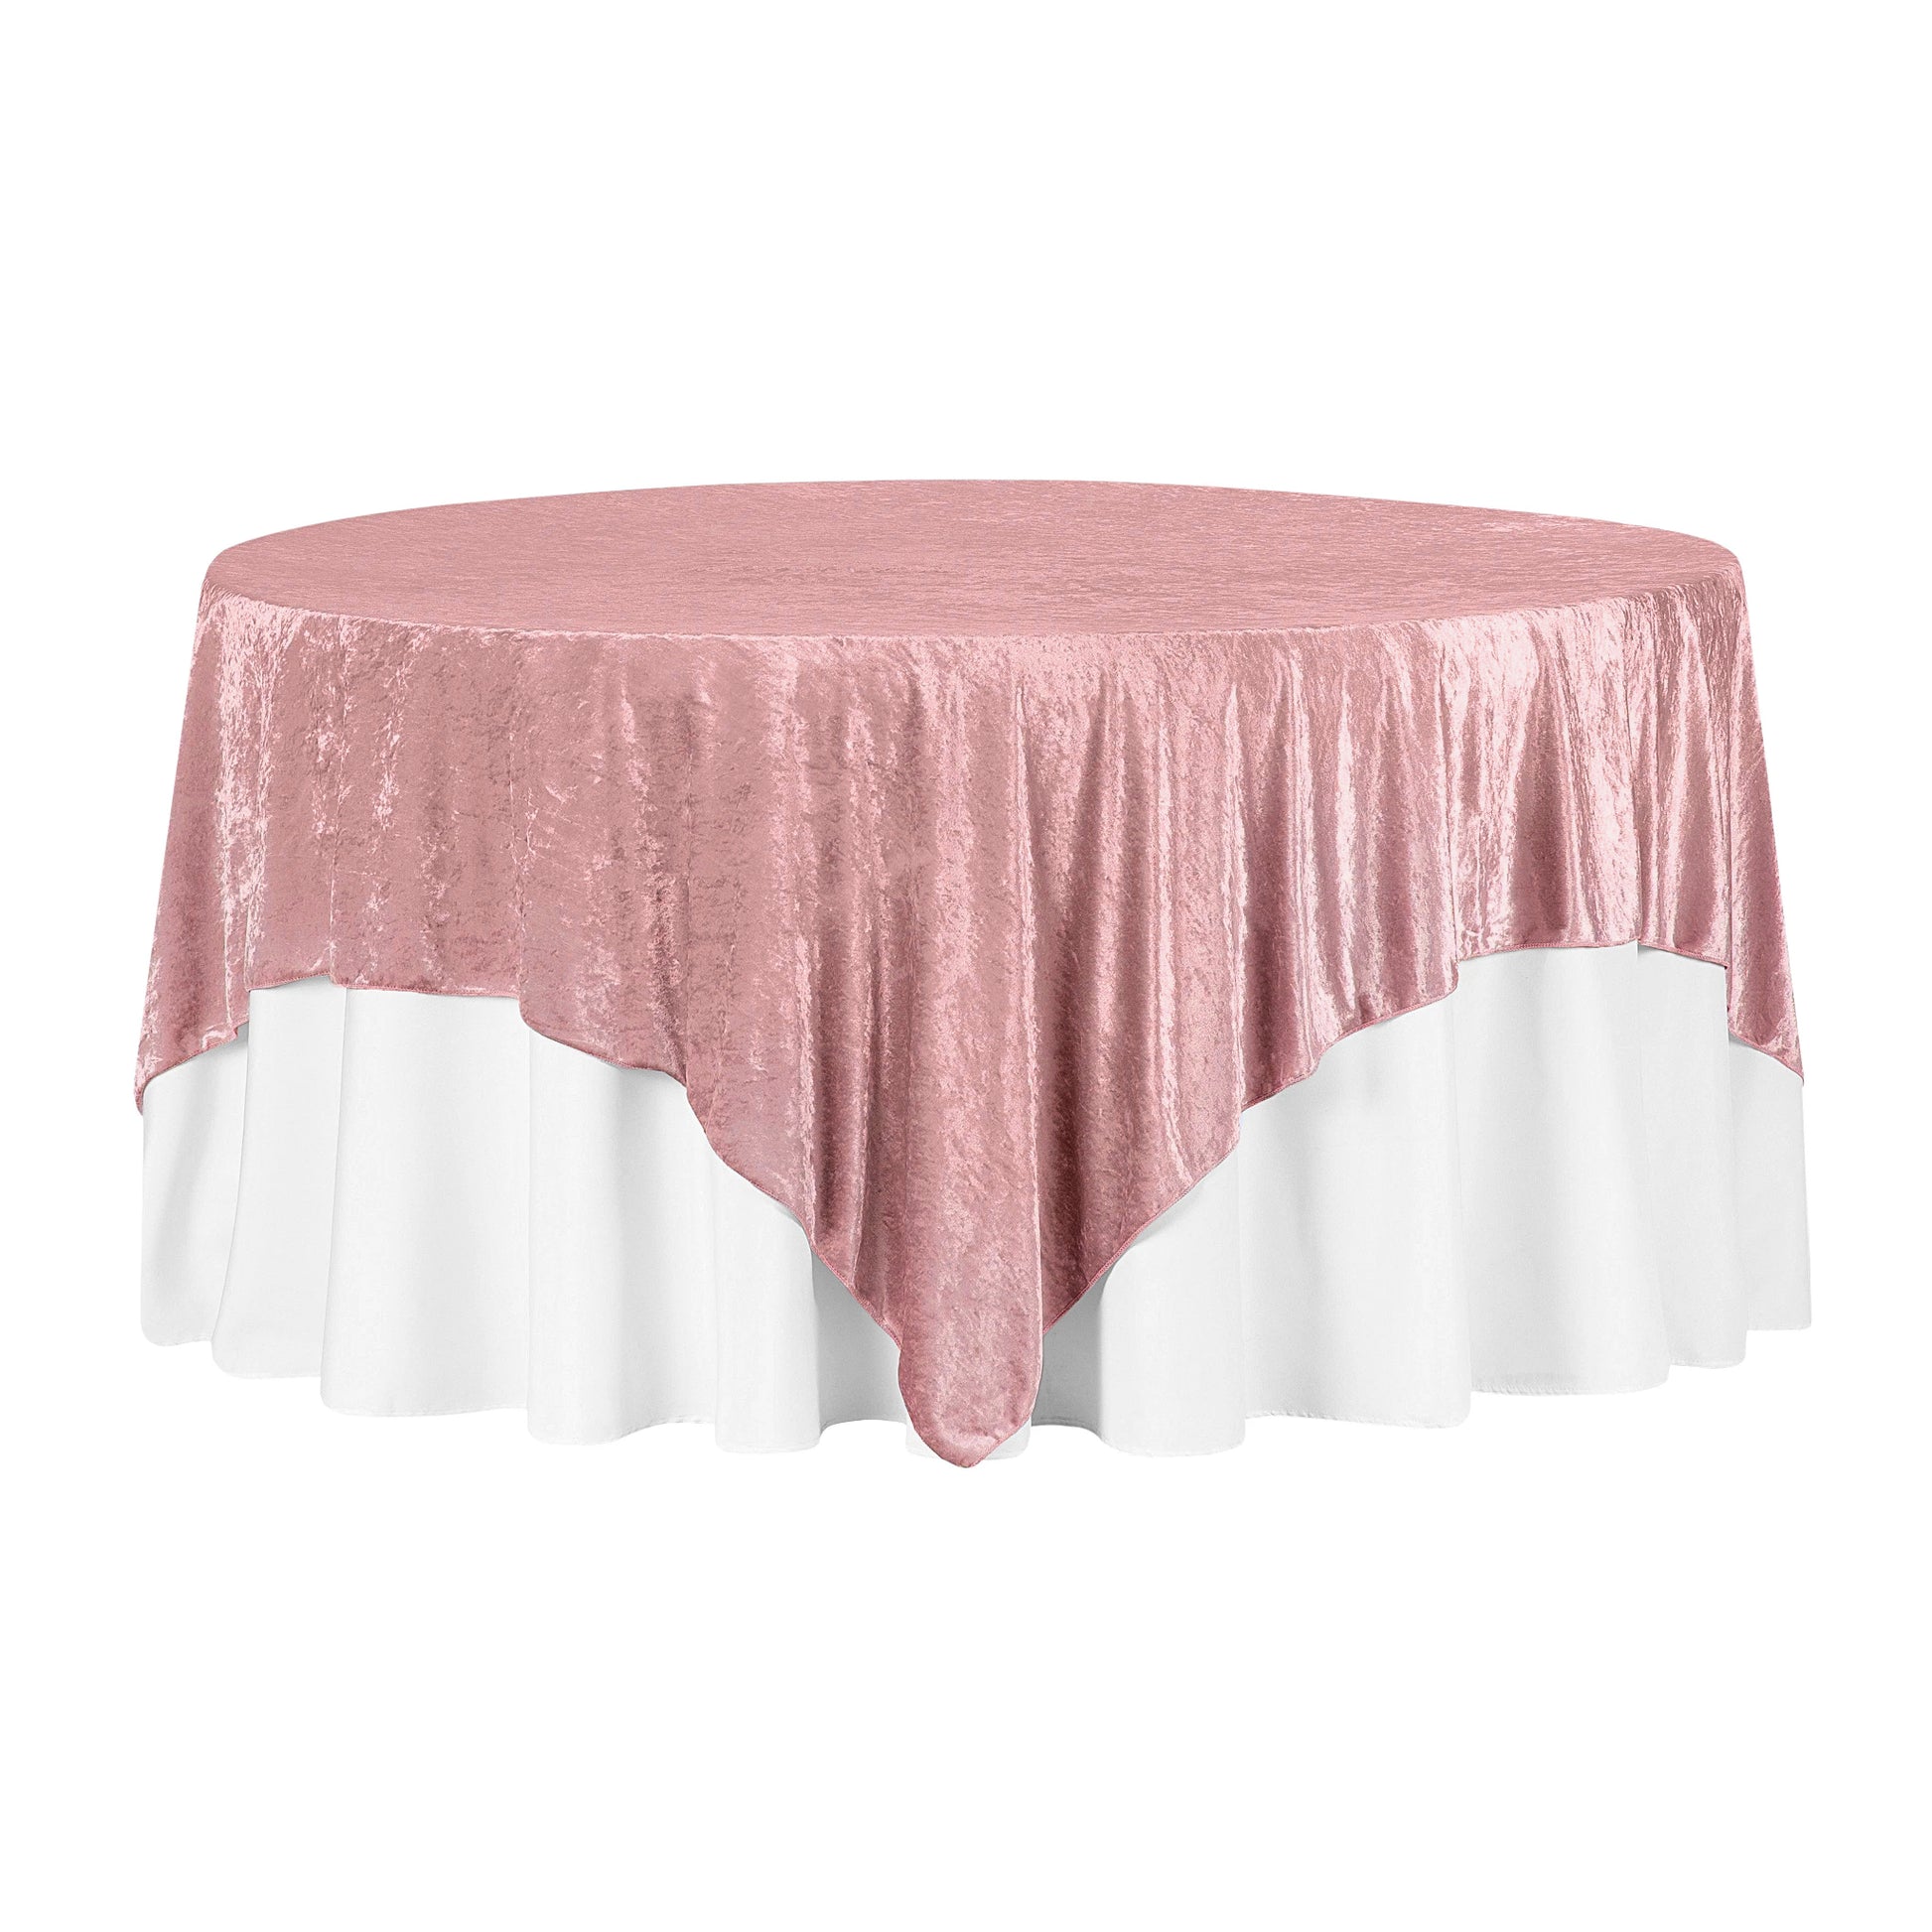 Velvet 85"x85" Square Tablecloth Table Overlay - Dusty Rose/Mauve - CV Linens